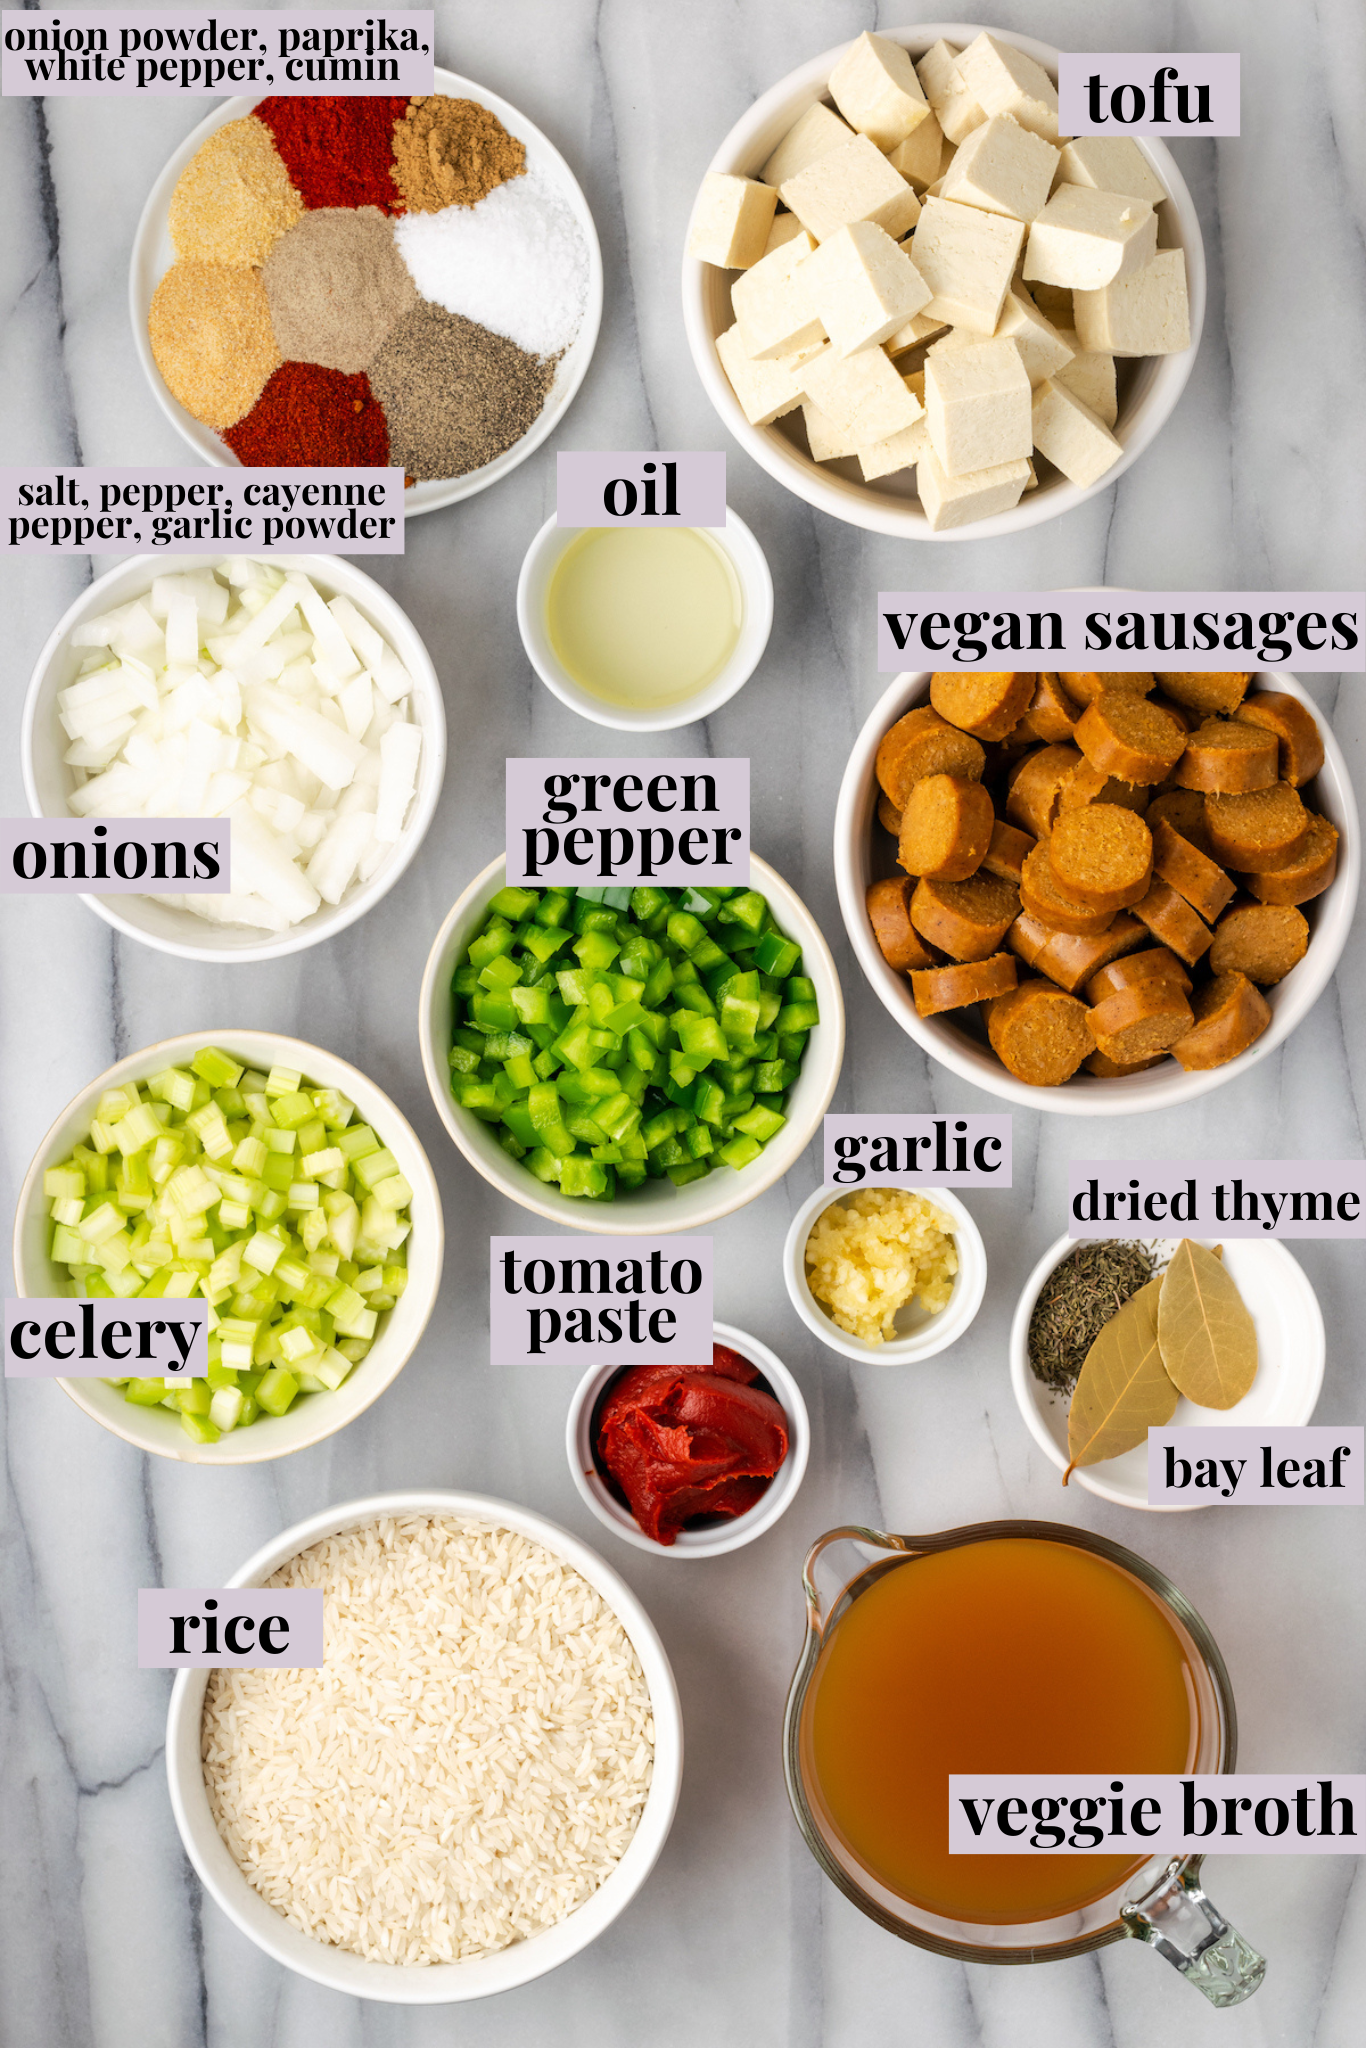 Overhead view of ingredients for vegan jambalaya